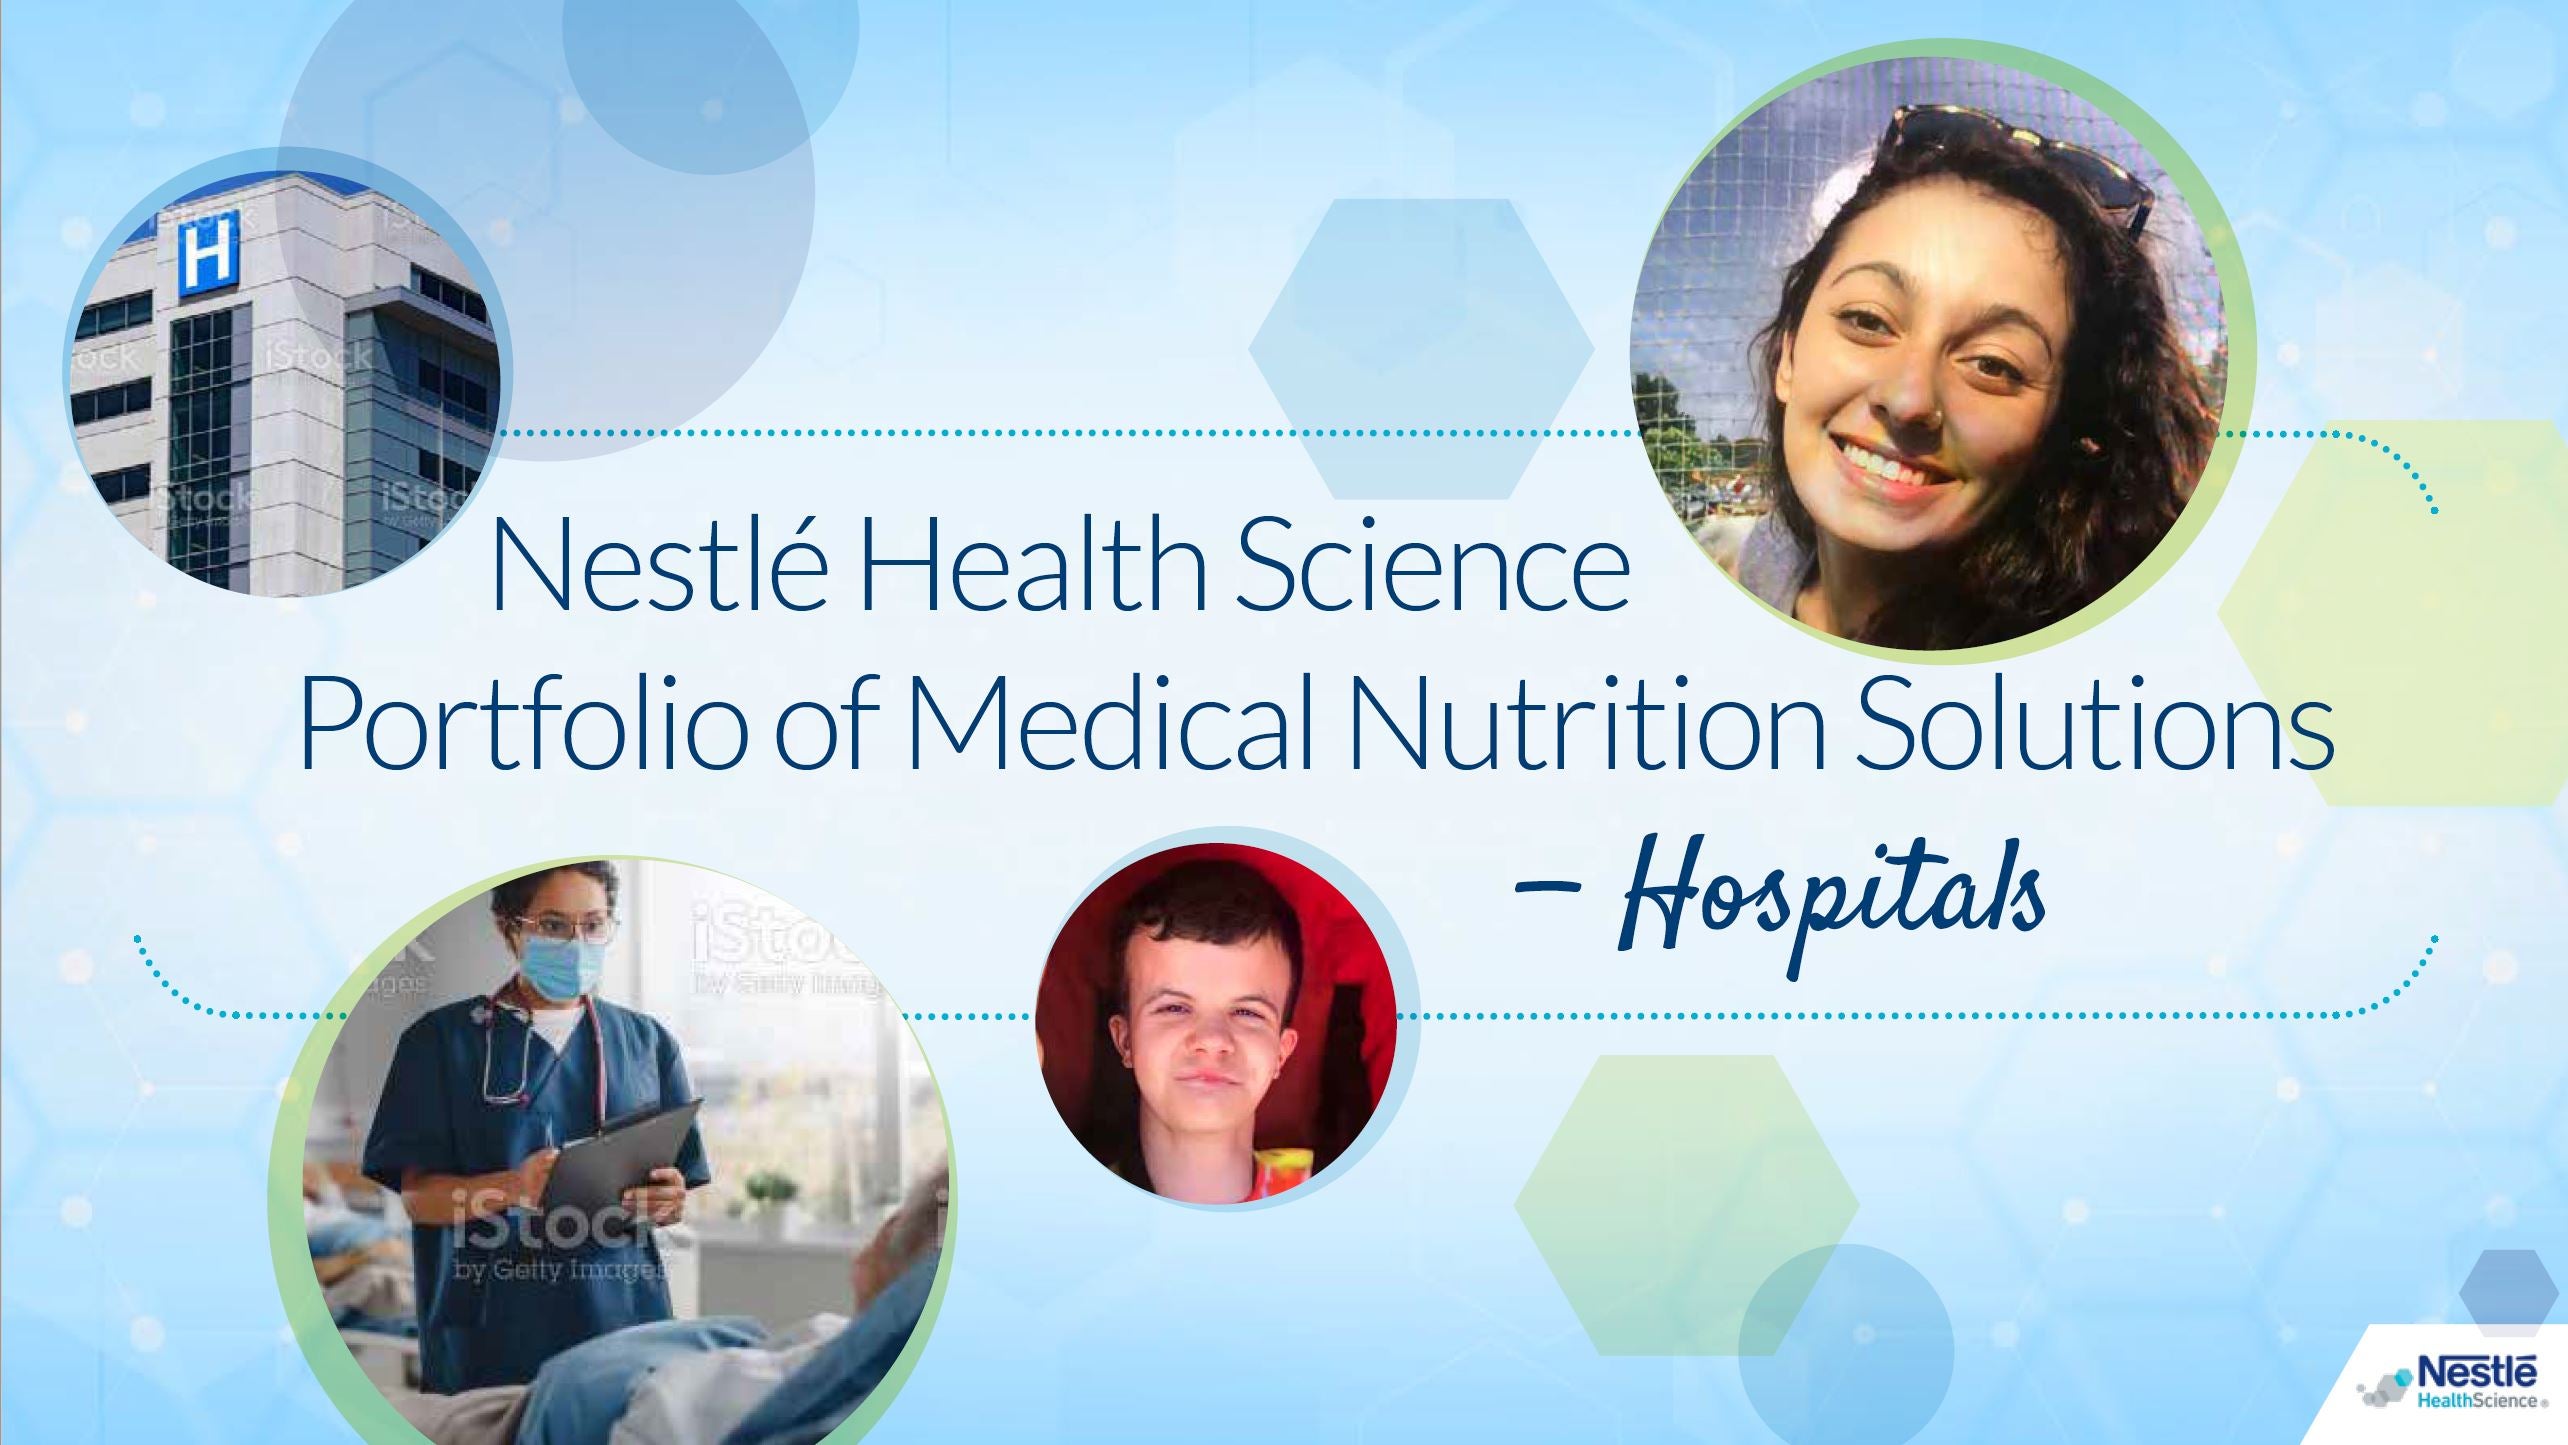 Patient Stories: Nestlé Health Science Portfolio of Medical Nutrition Solutions